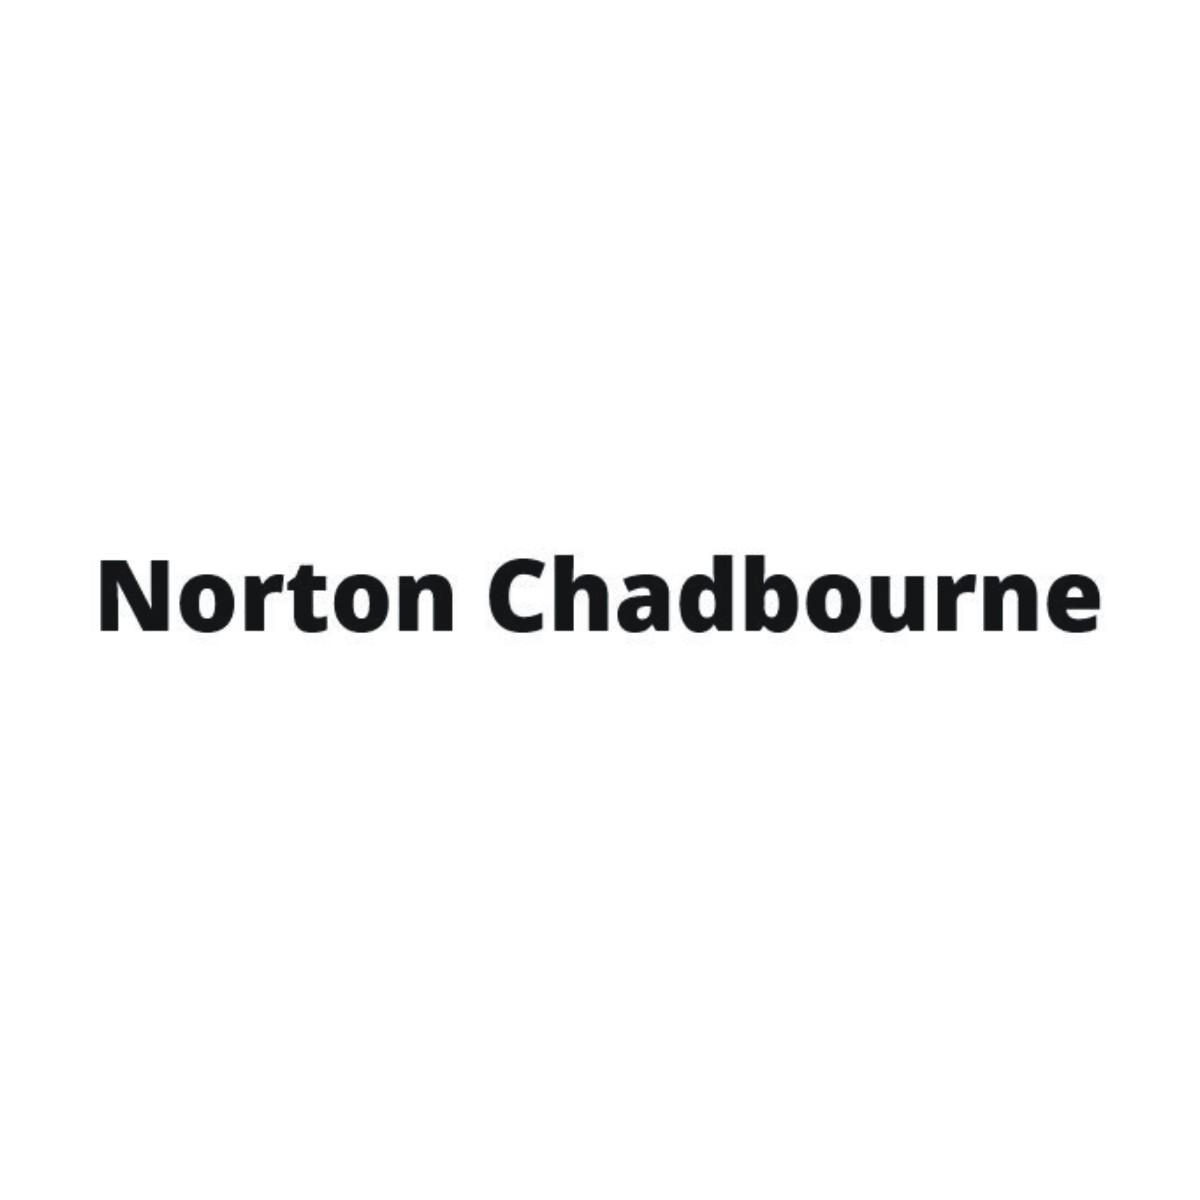 NORTON CHADBOURNE